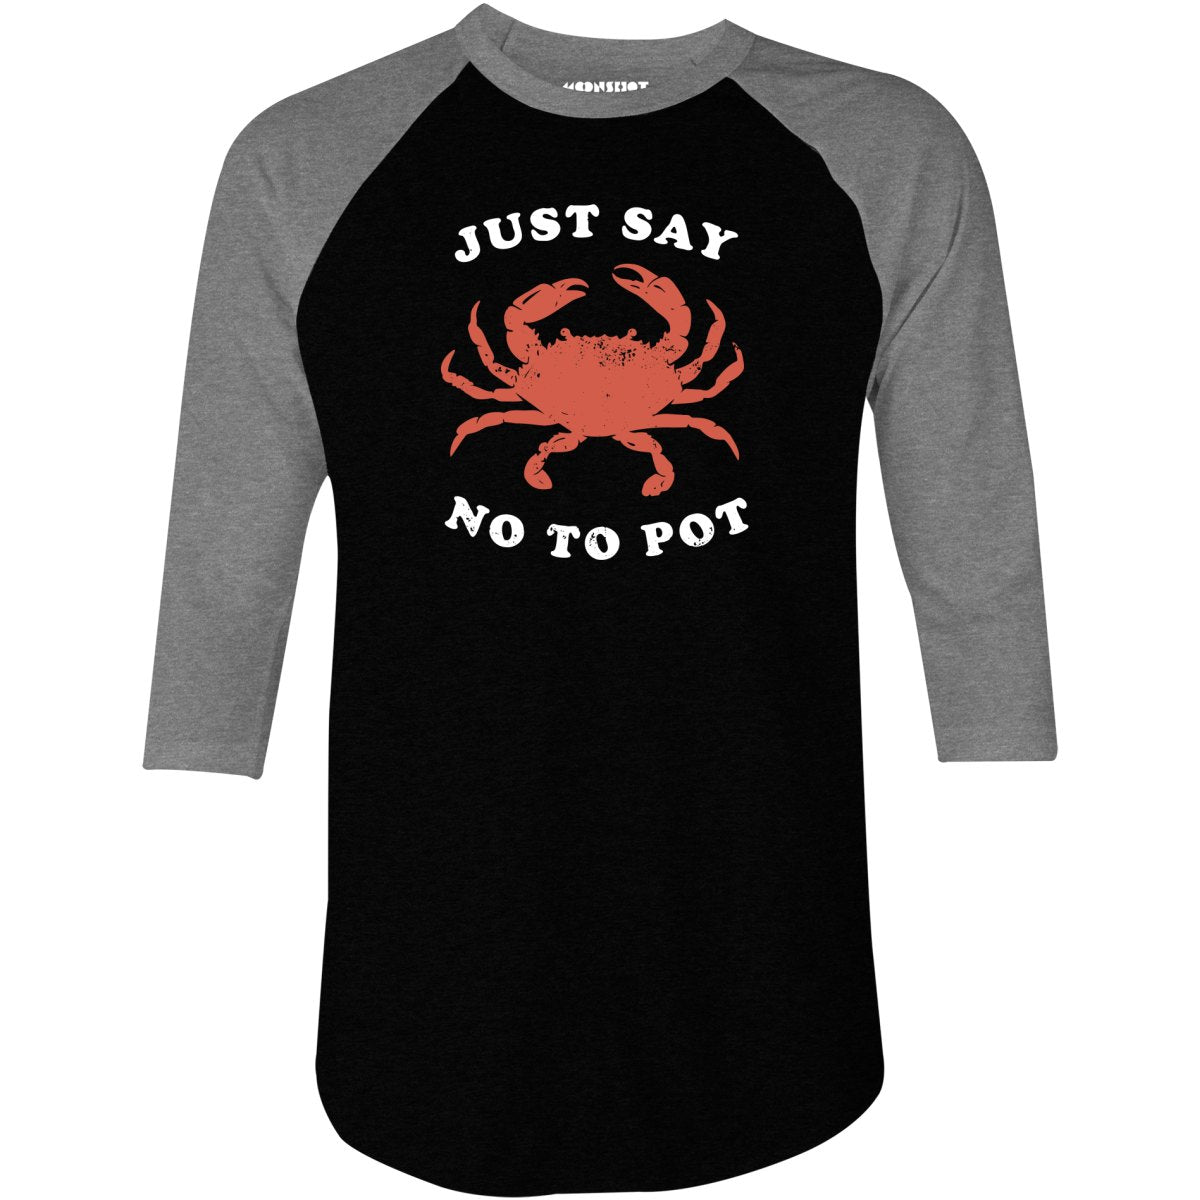 Just Say No To Pot - 3/4 Sleeve Raglan T-Shirt